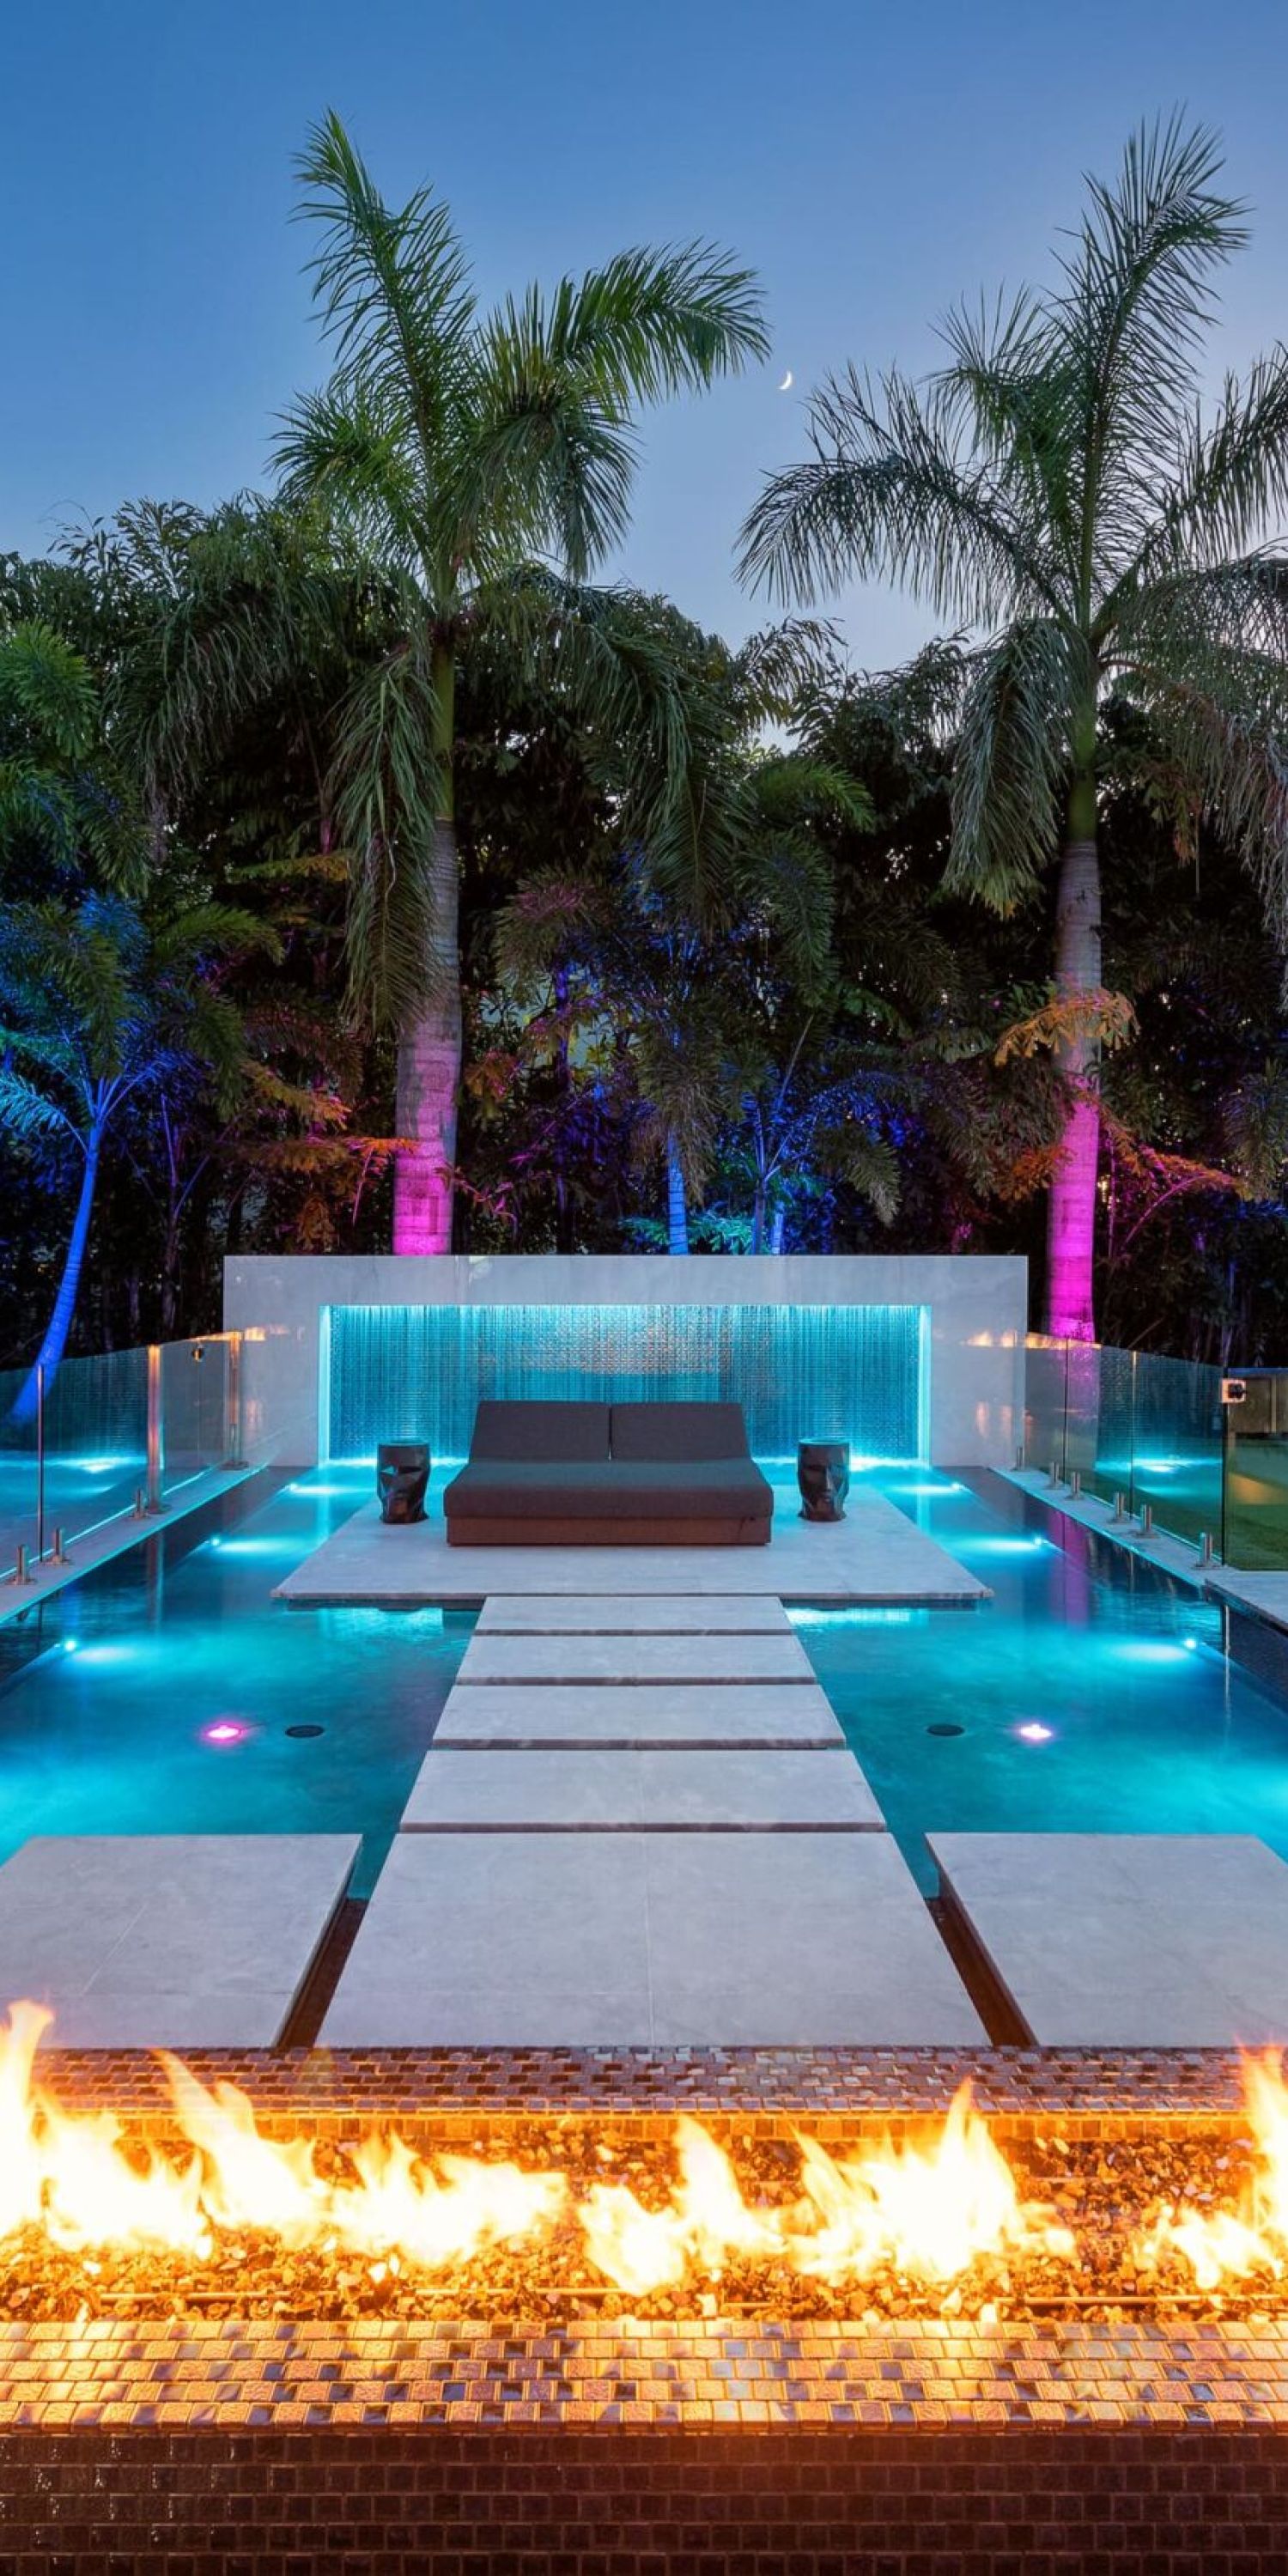 Ikes-Carter-Pools-Fort-Lauderdale-pool-builder-buscemi-00003